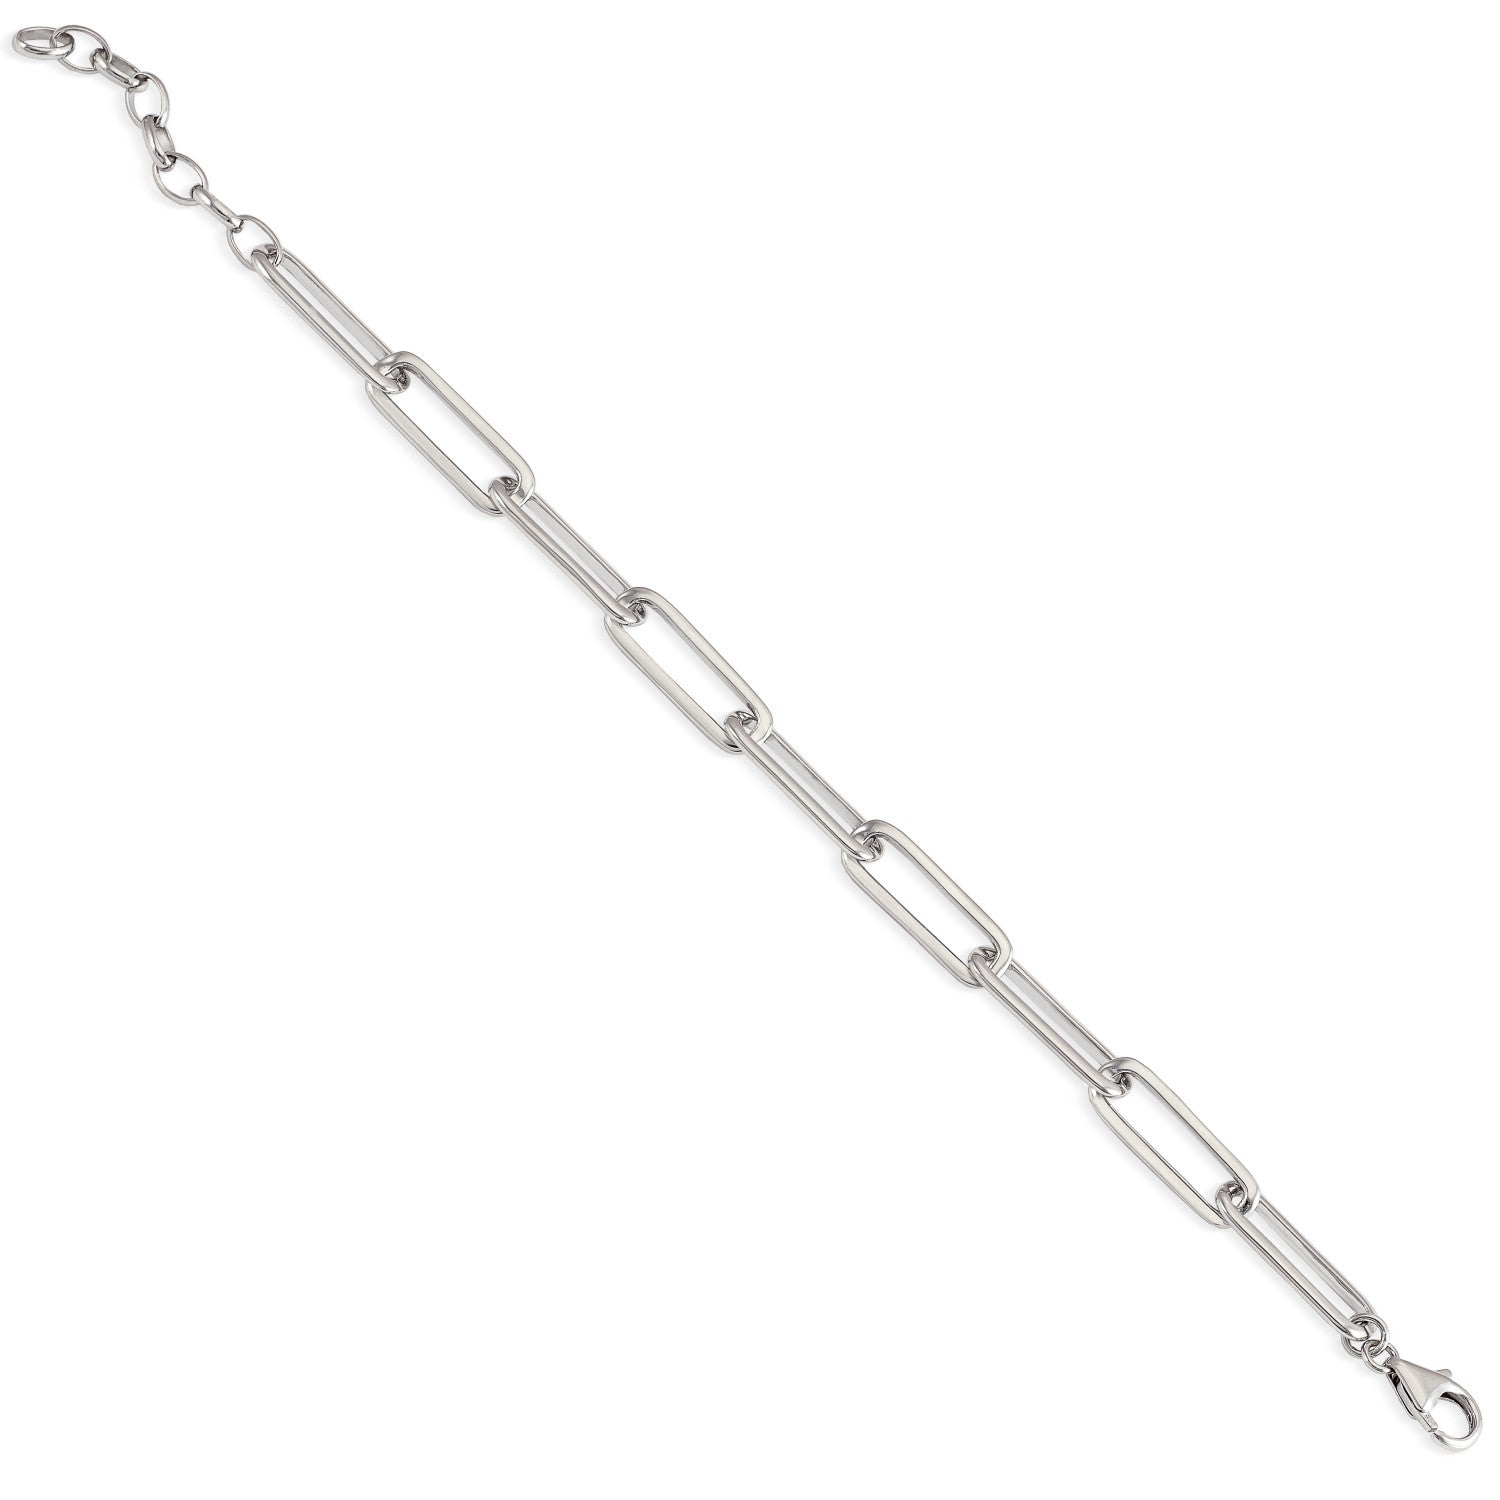 Bracelet - Bracelets silver link bracelets paper clip design